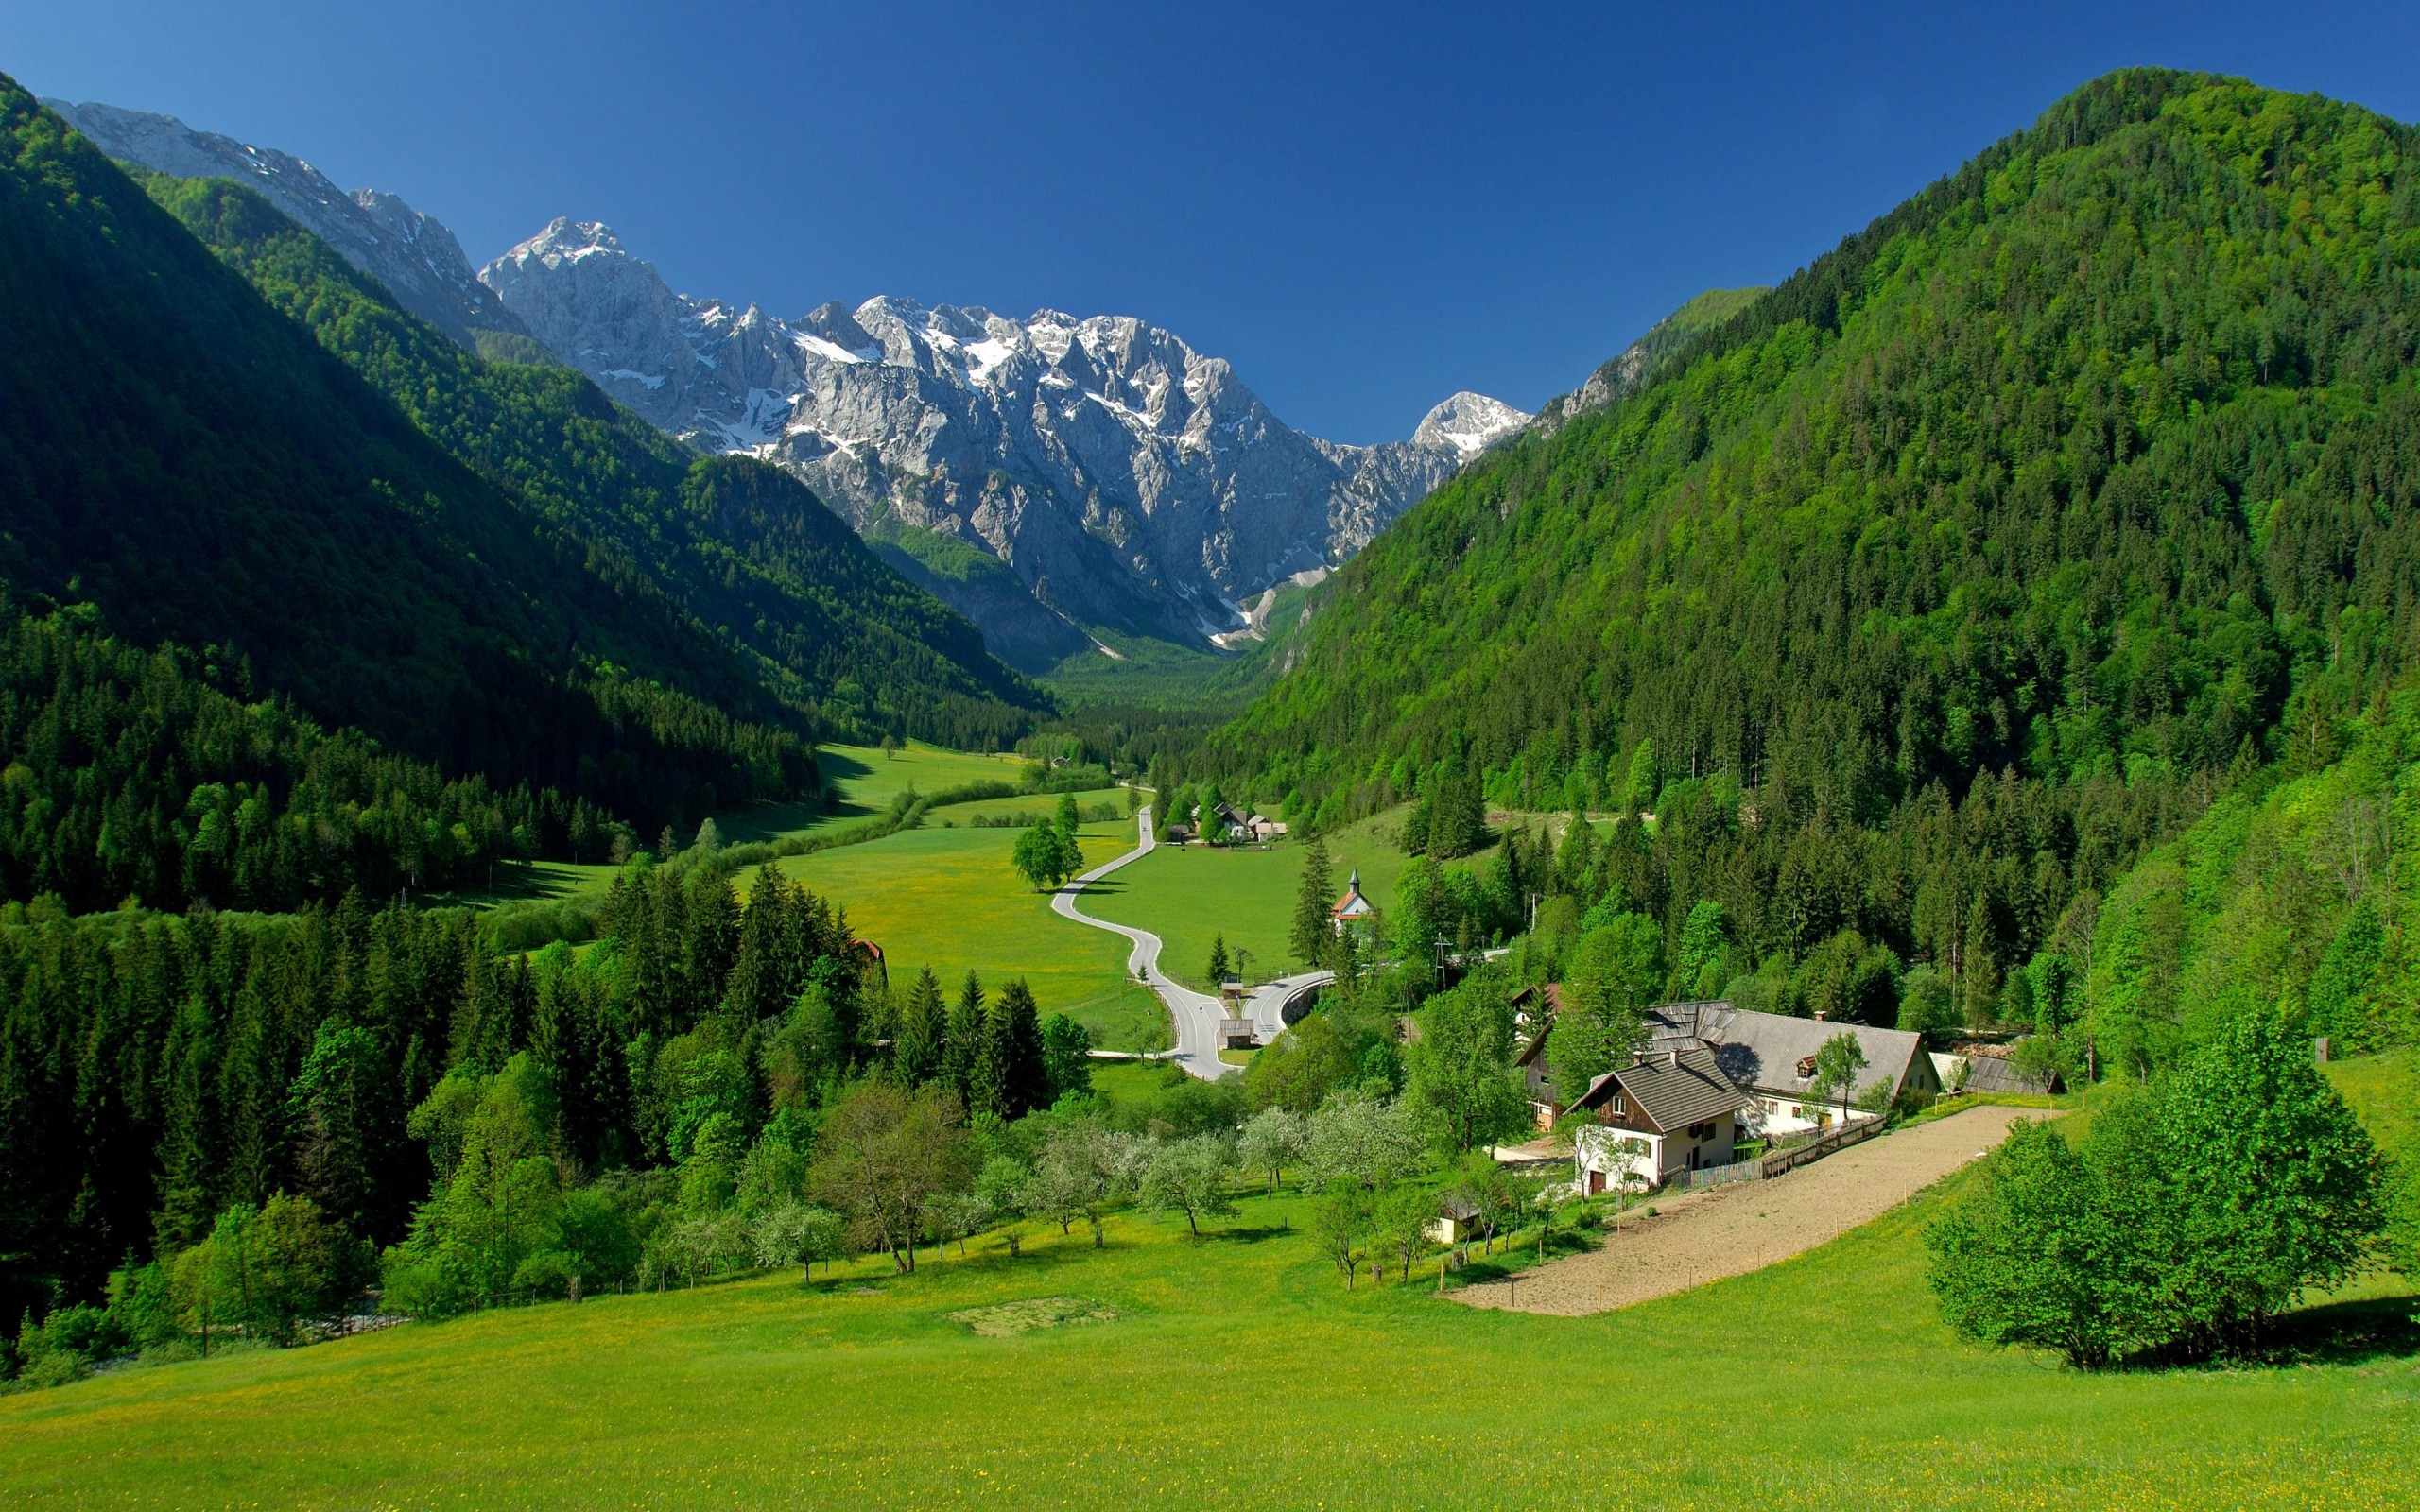 Spring In The Alpine Valley Wallpaper for Desktop 2560x1600